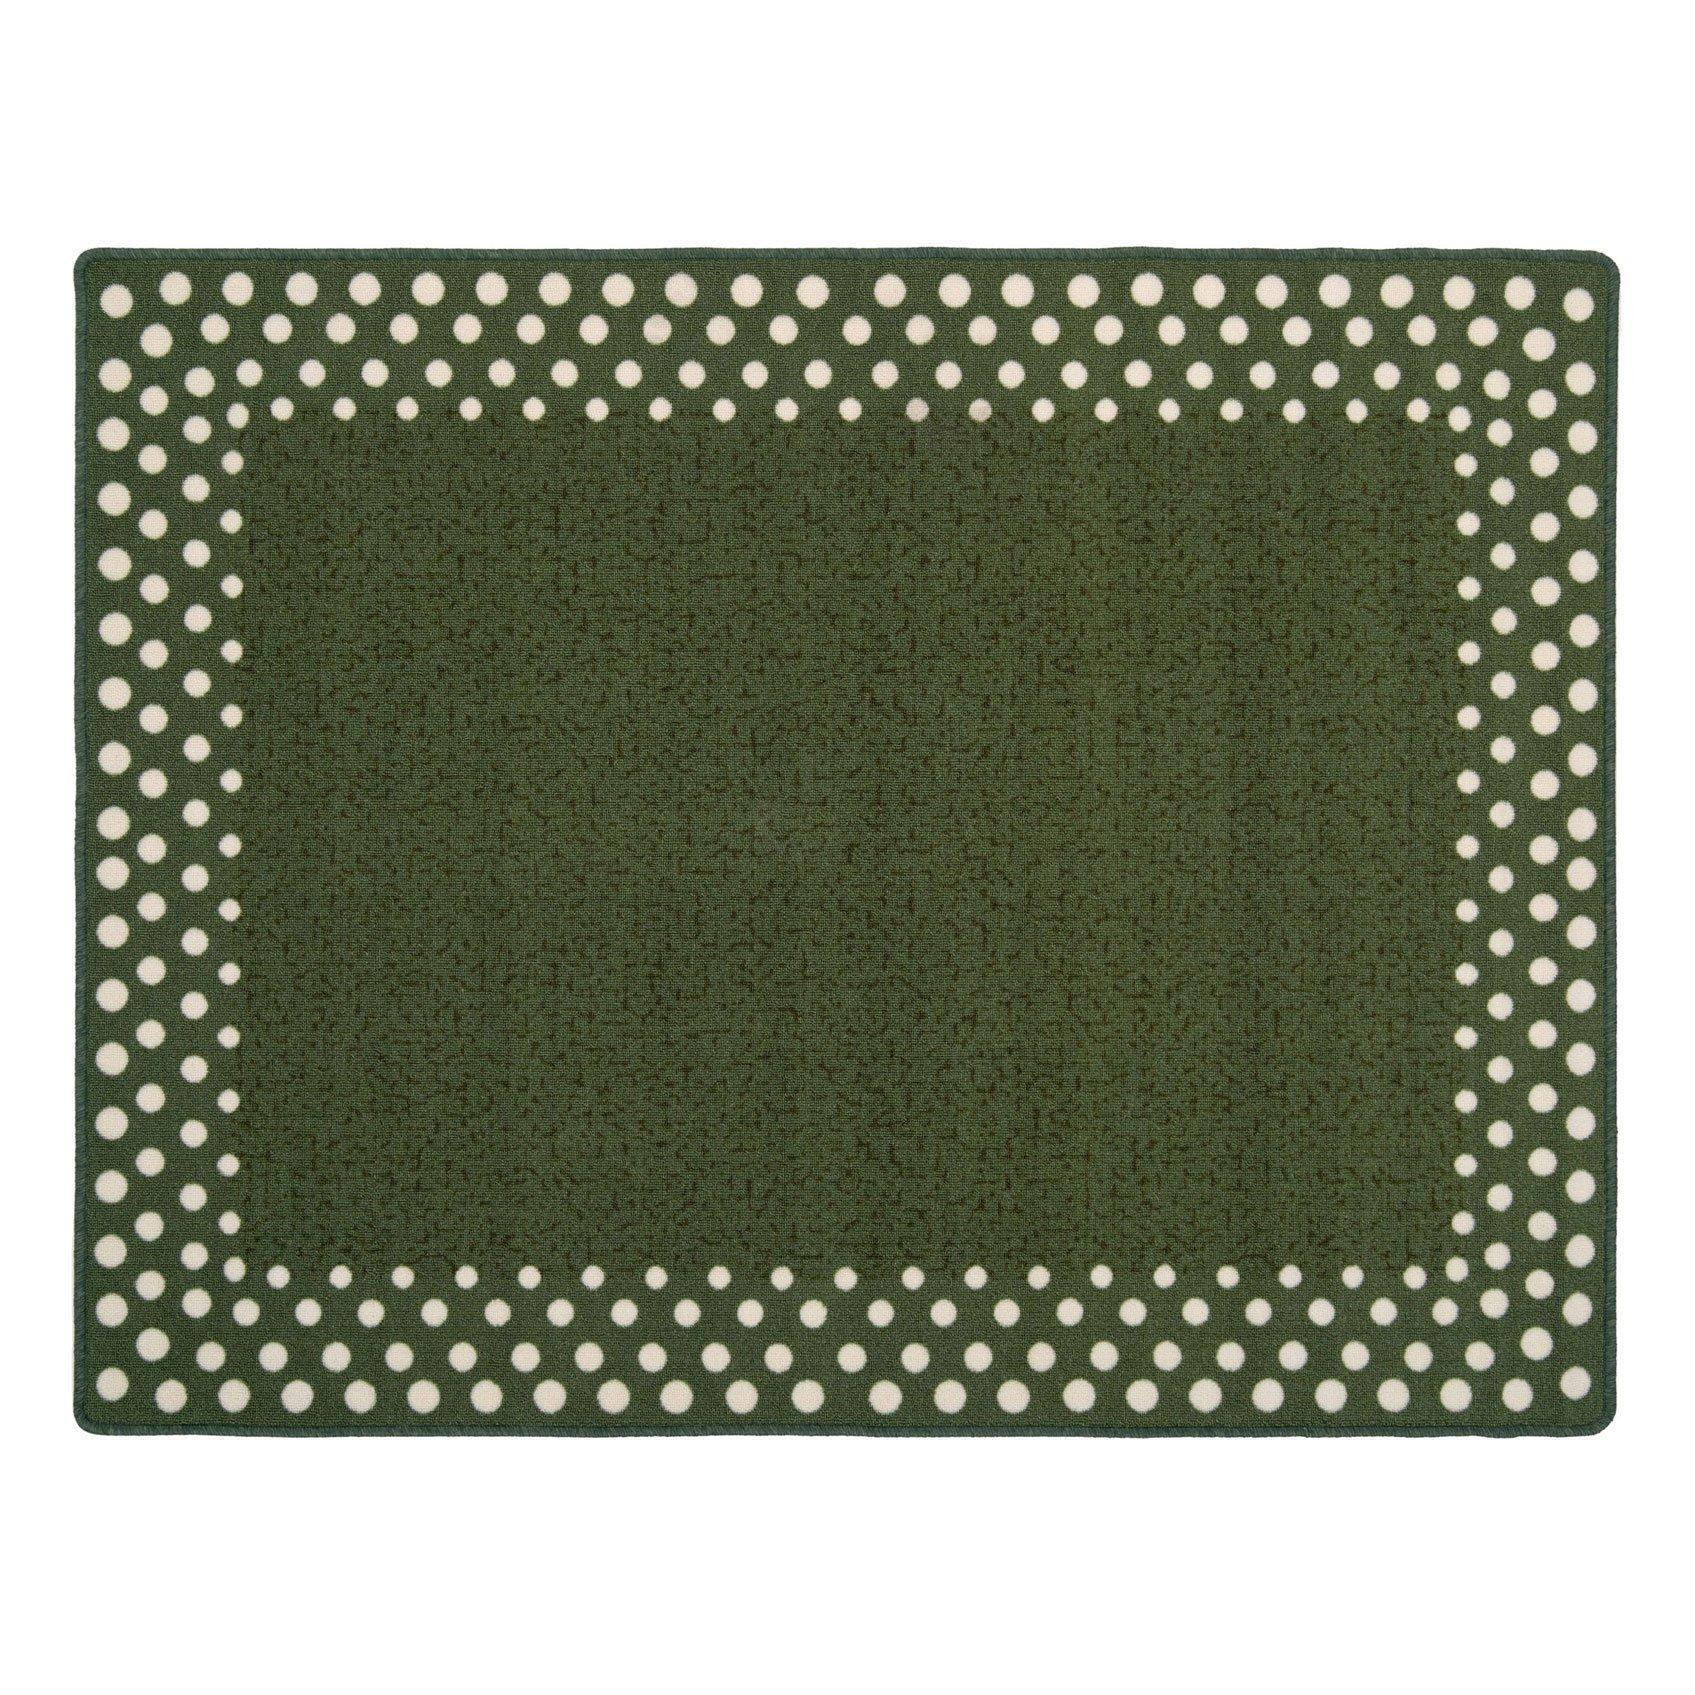 Green Polka Dot Bordered Non Slip Washable Utility Mat - image 1